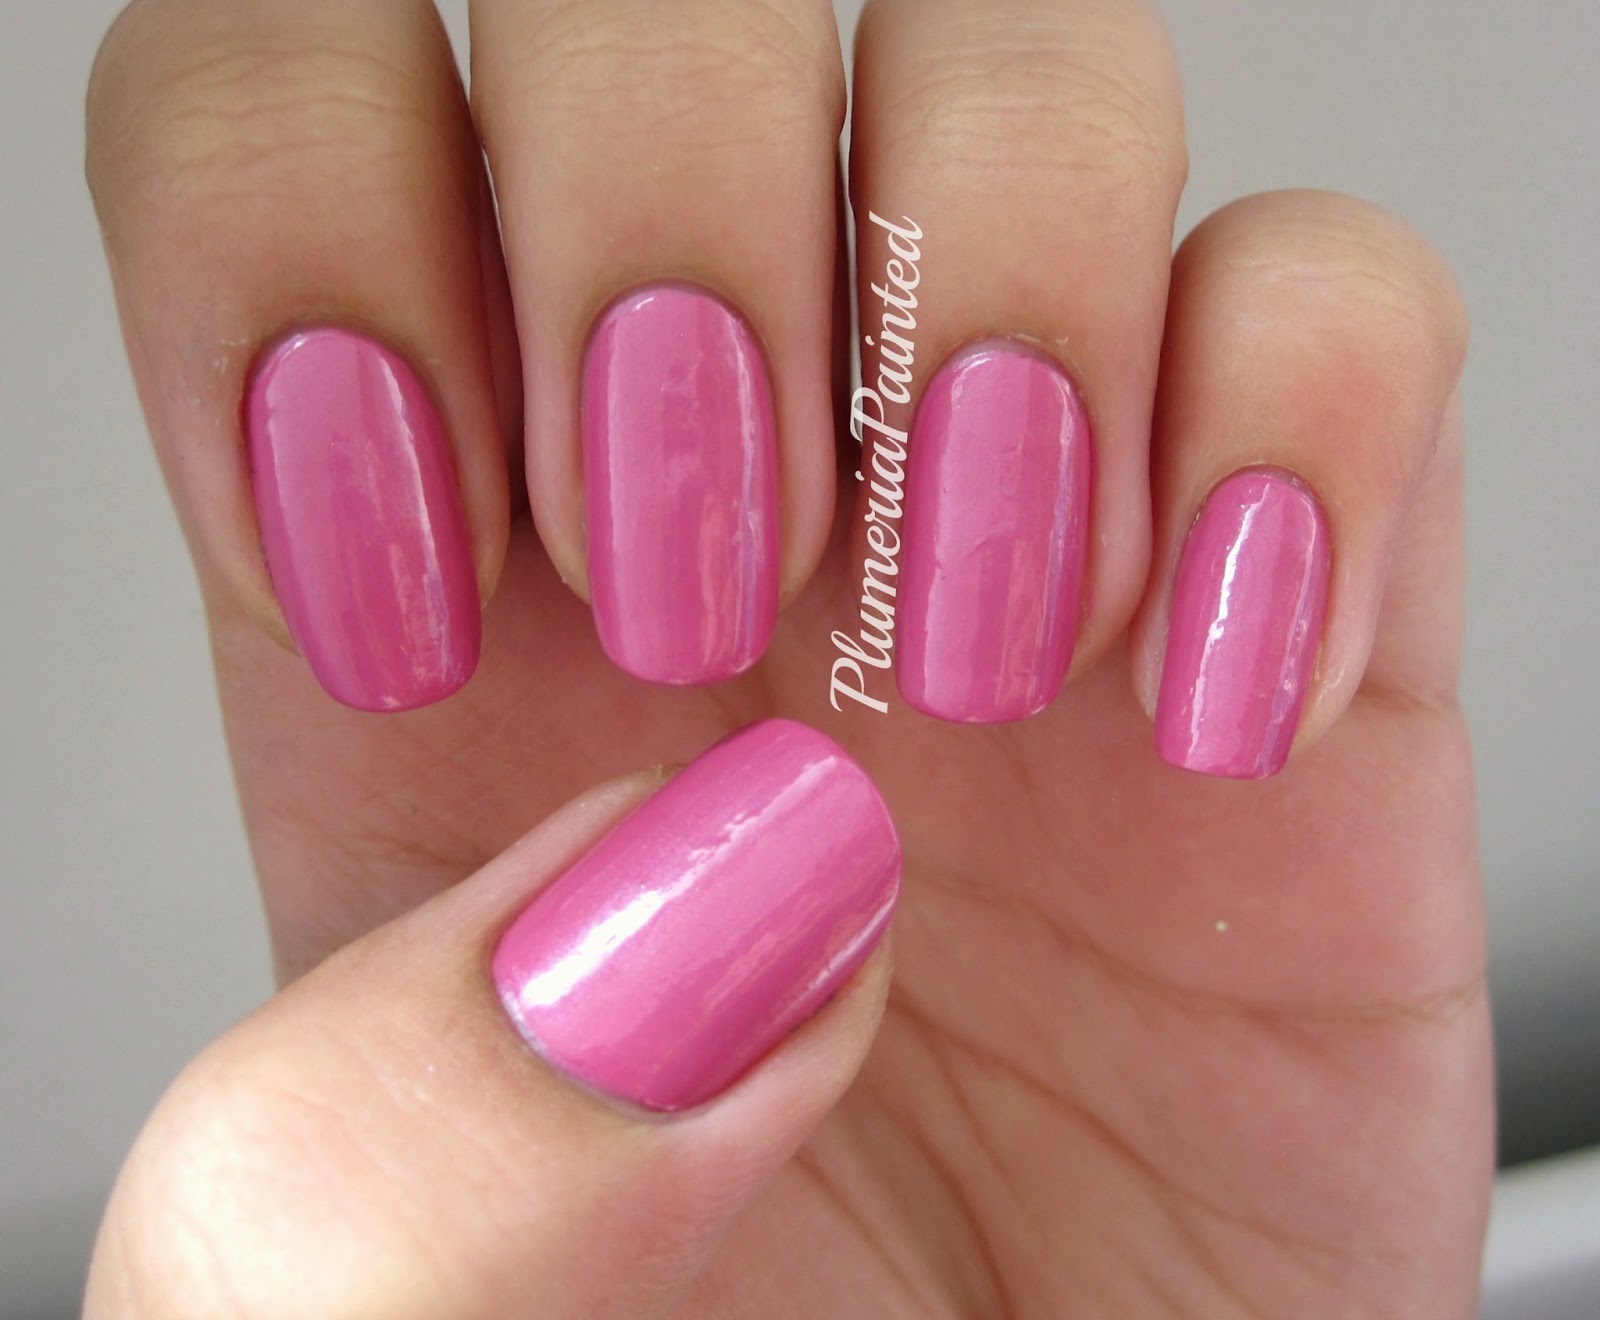 9. Soft pink nail polish - wide 4